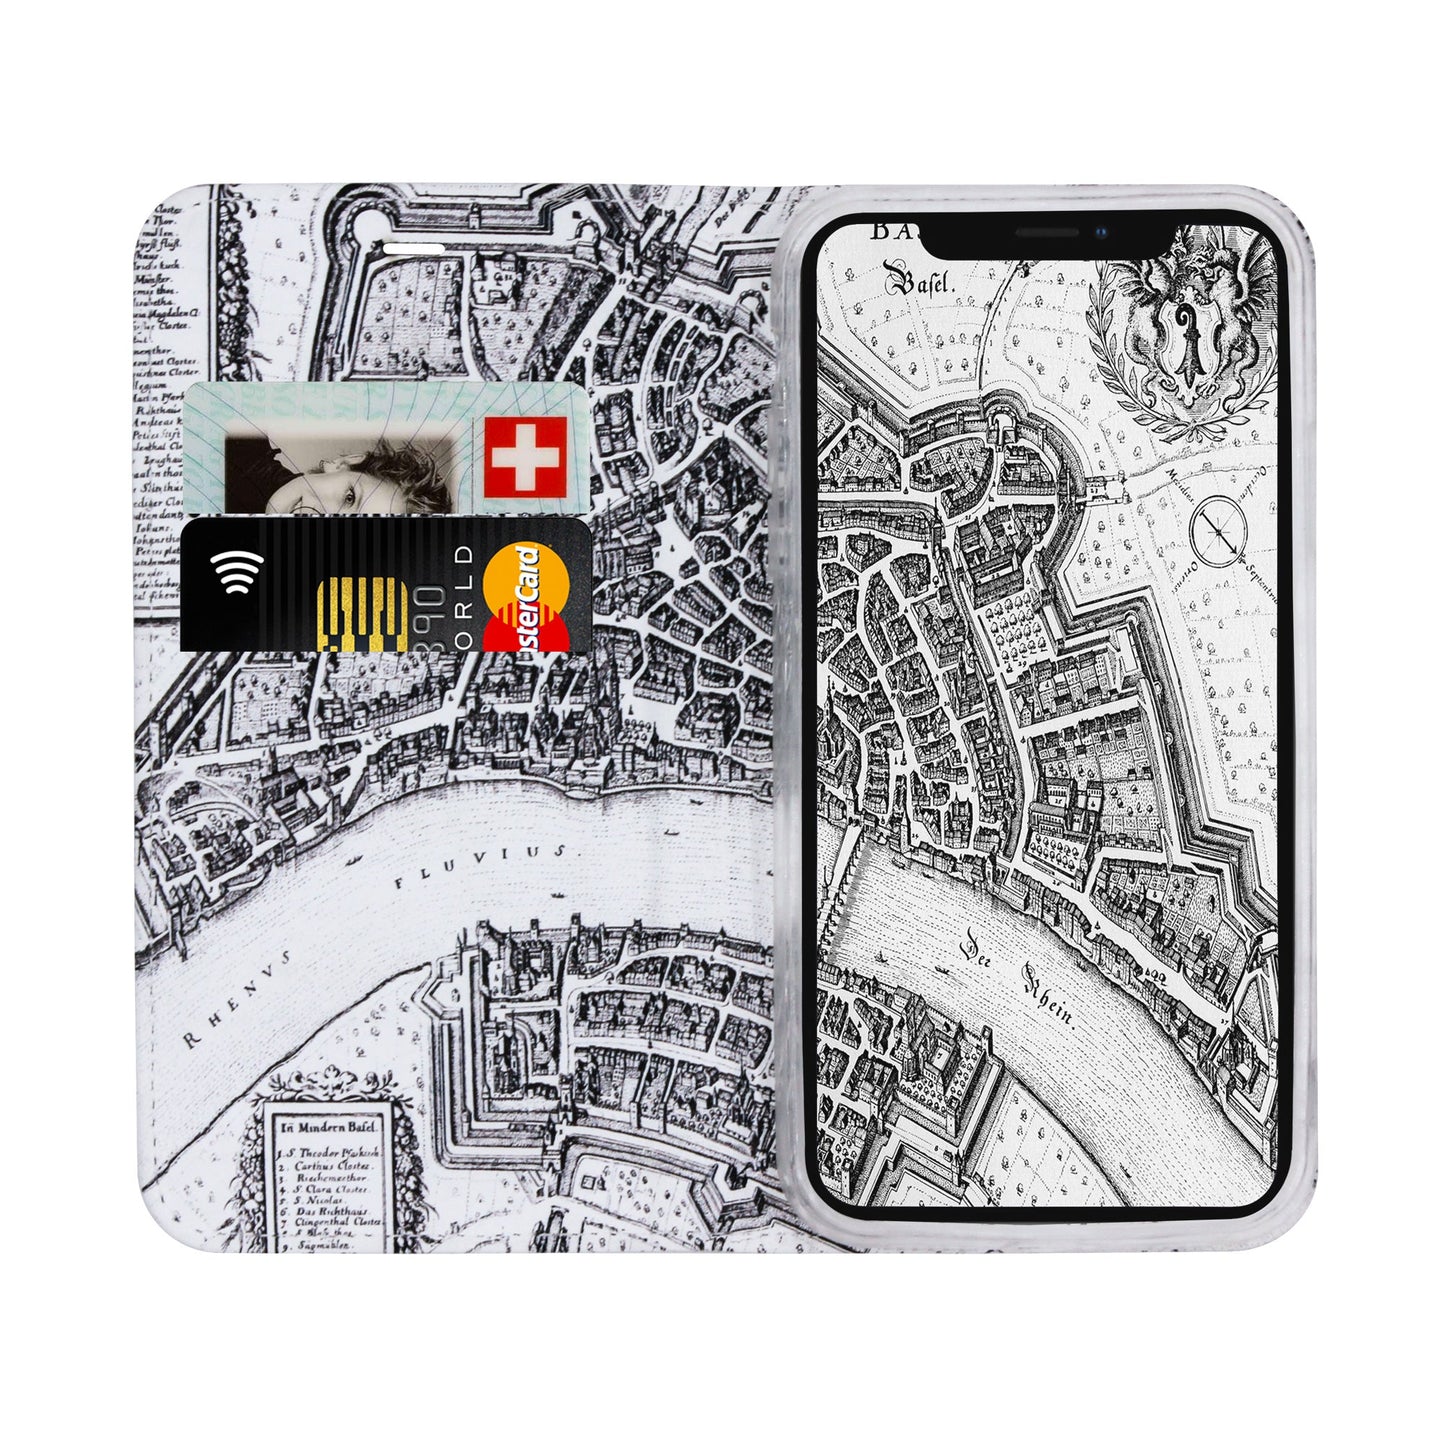 Basel Merian Panorama Case für iPhone X/XS